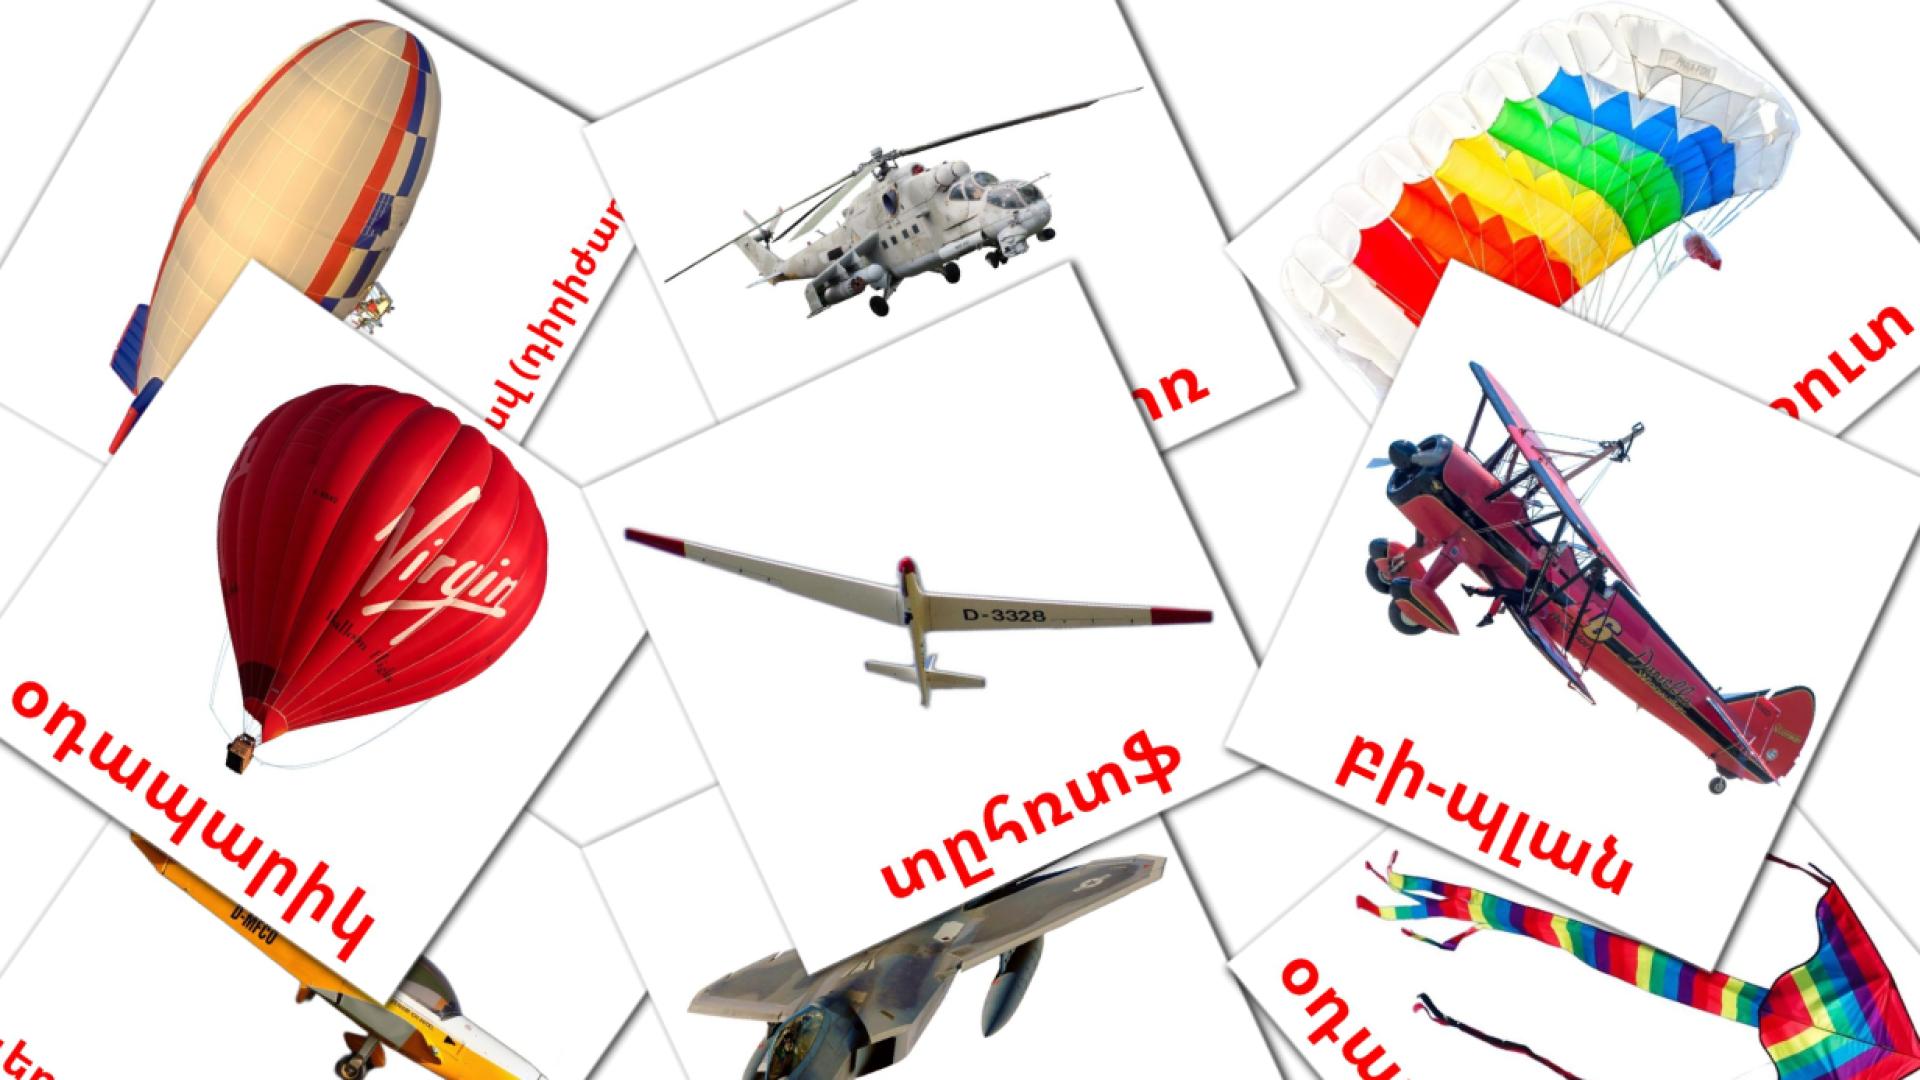 Aircraft - armenian vocabulary cards